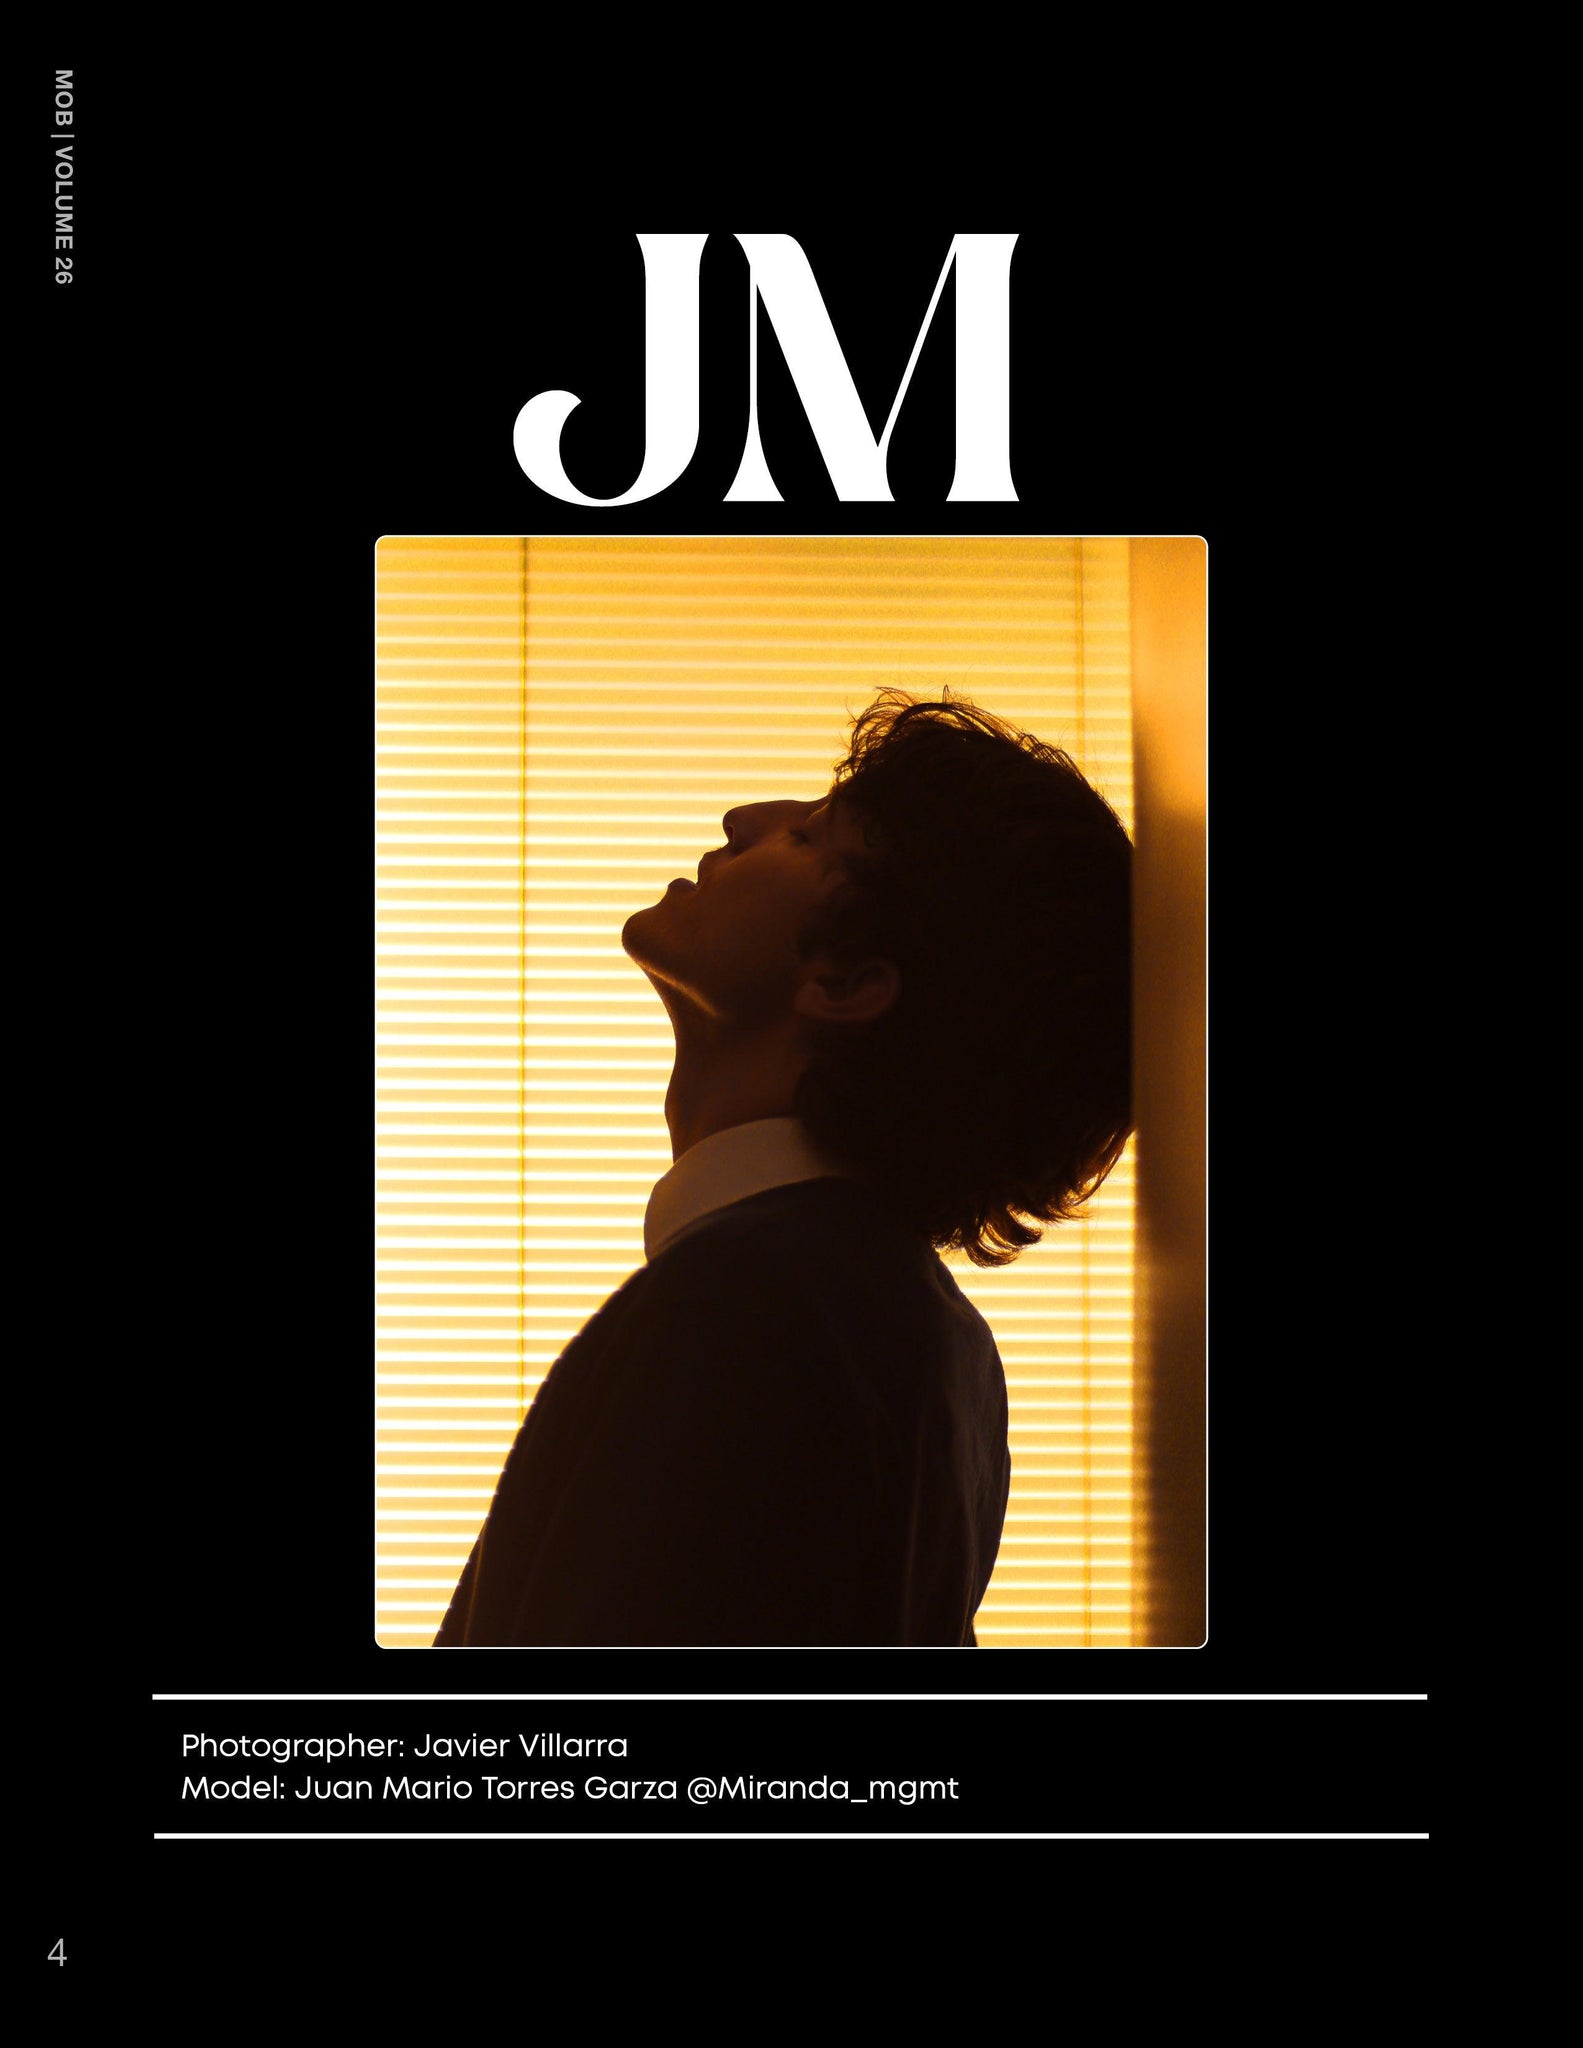 MOB JOURNAL | VOLUME TWENTY SIX | ISSUE #21 - Mob Journal